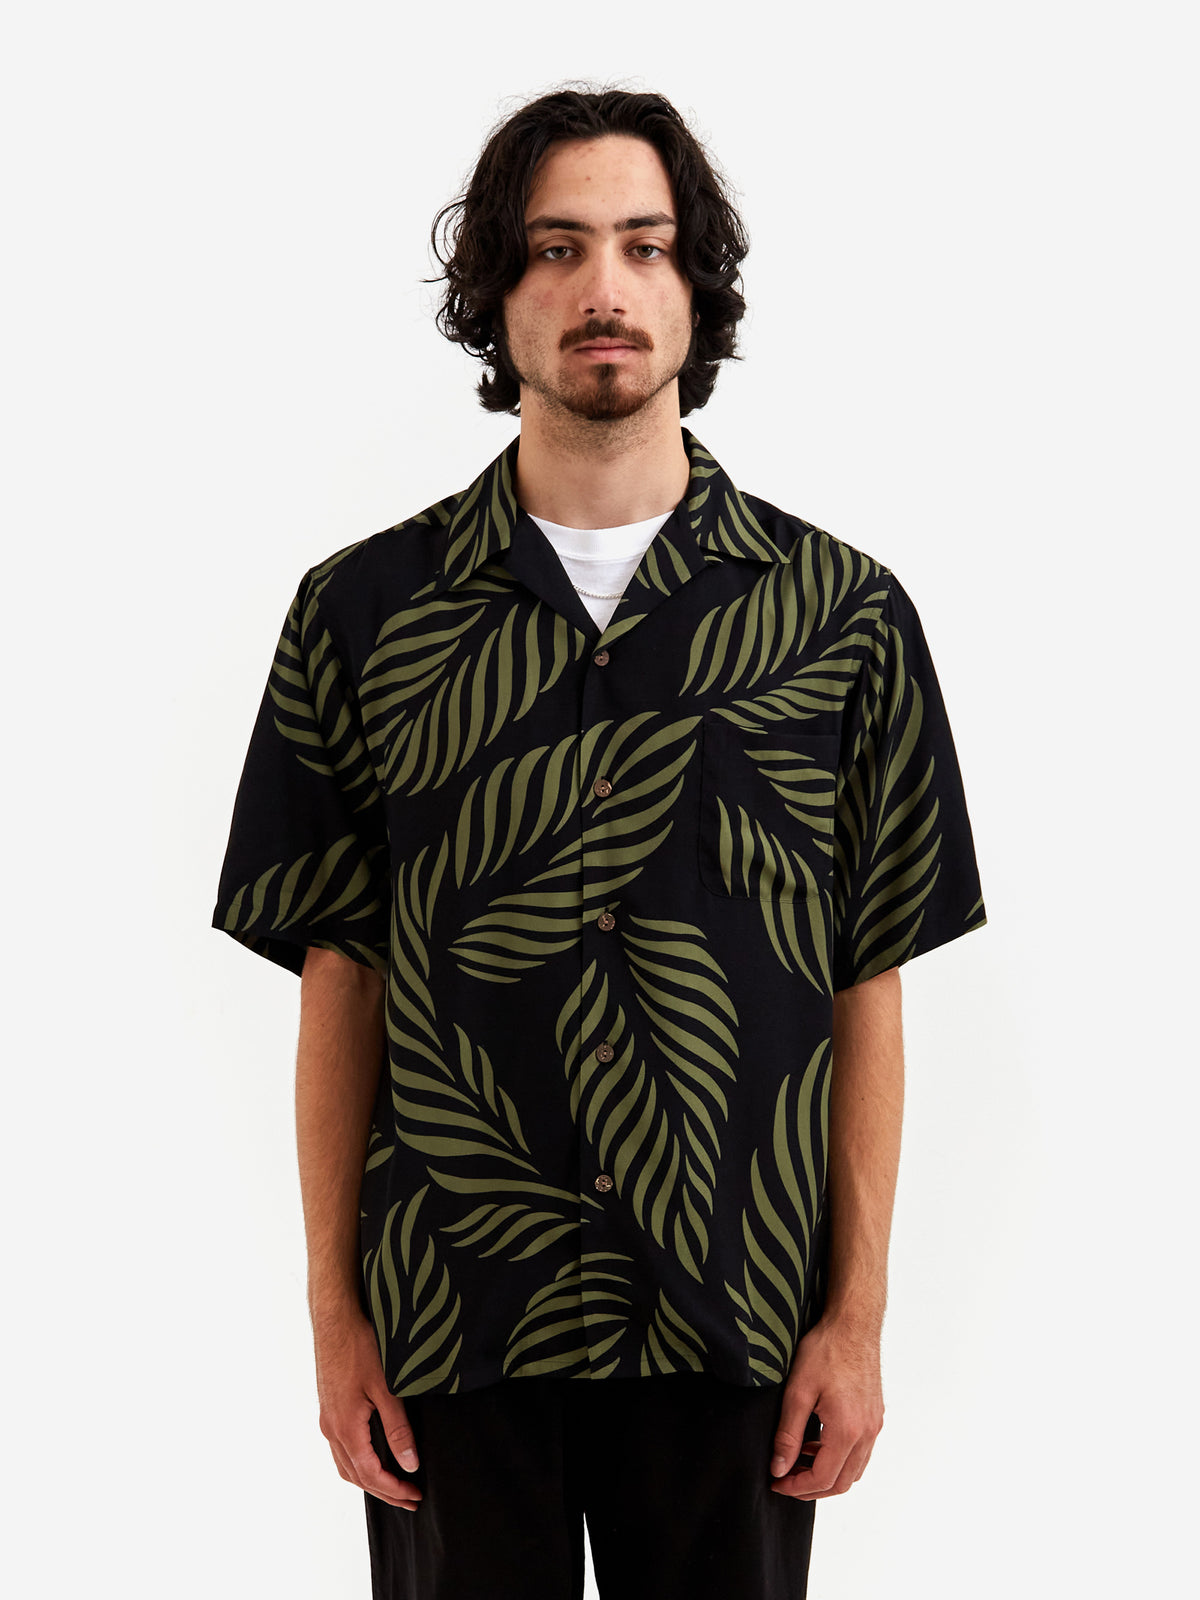 We carry an excellent range of Wacko Maria Hawaiian Shirt S/S